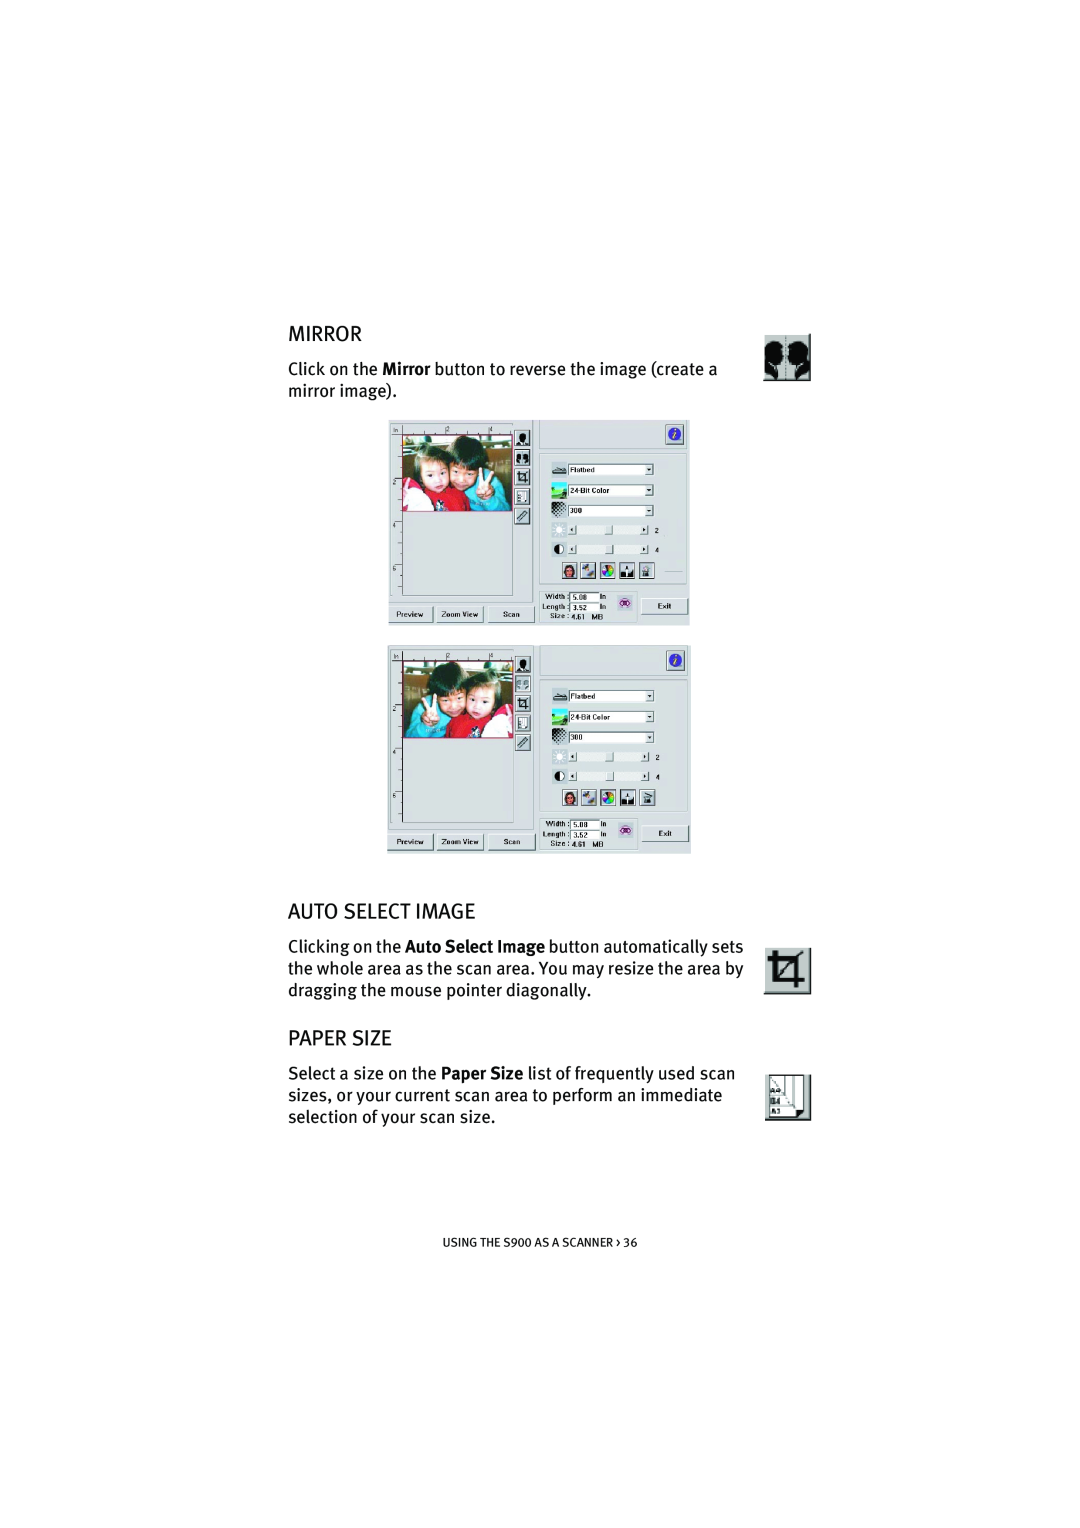 Oki S900 manual Mirror, Auto Select Image, Paper Size 